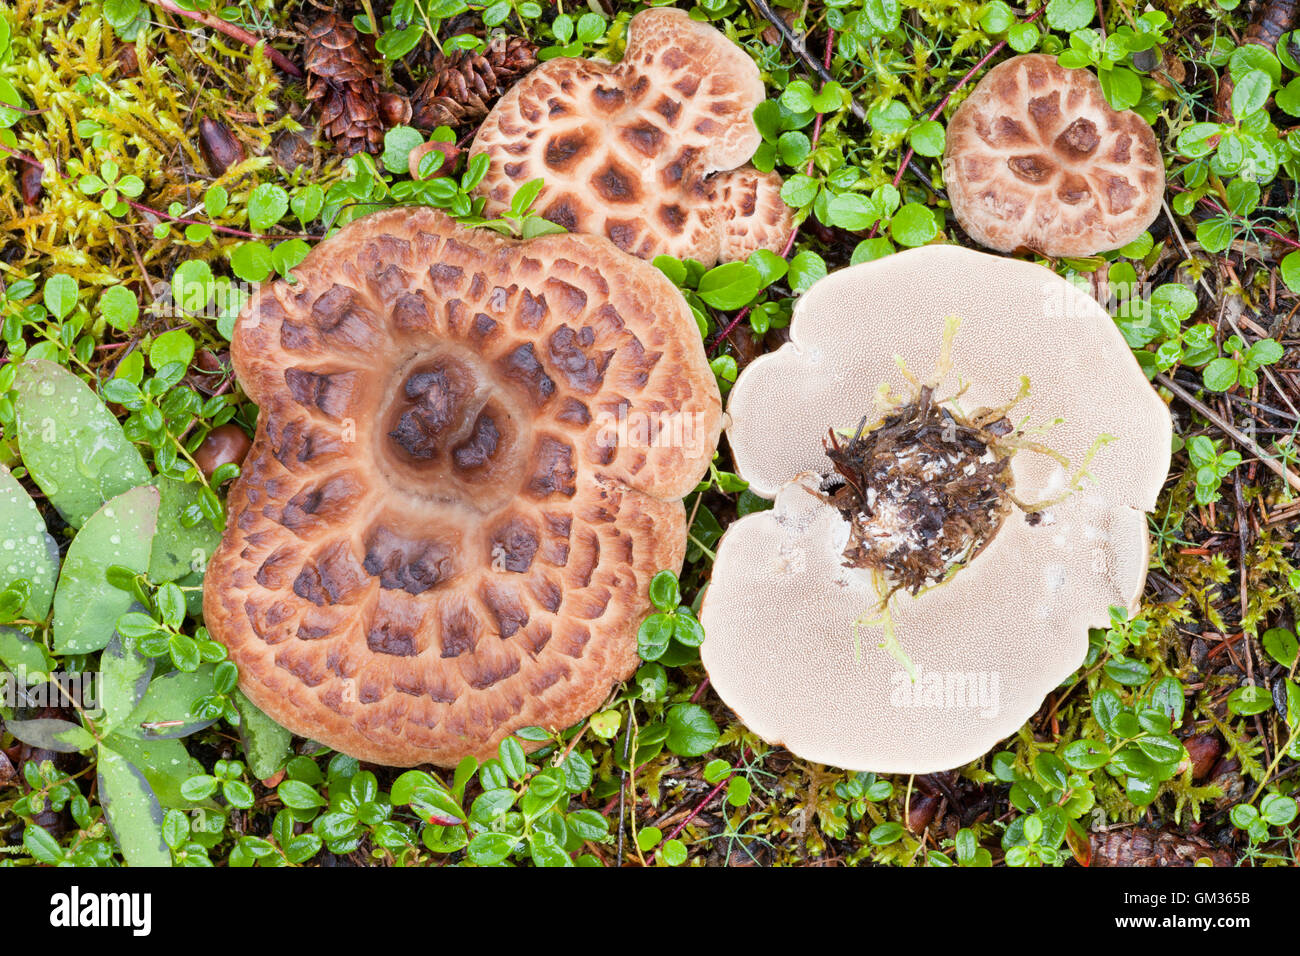 Shingled Hedgehog Mushroom growing on forest floor Stock Photo